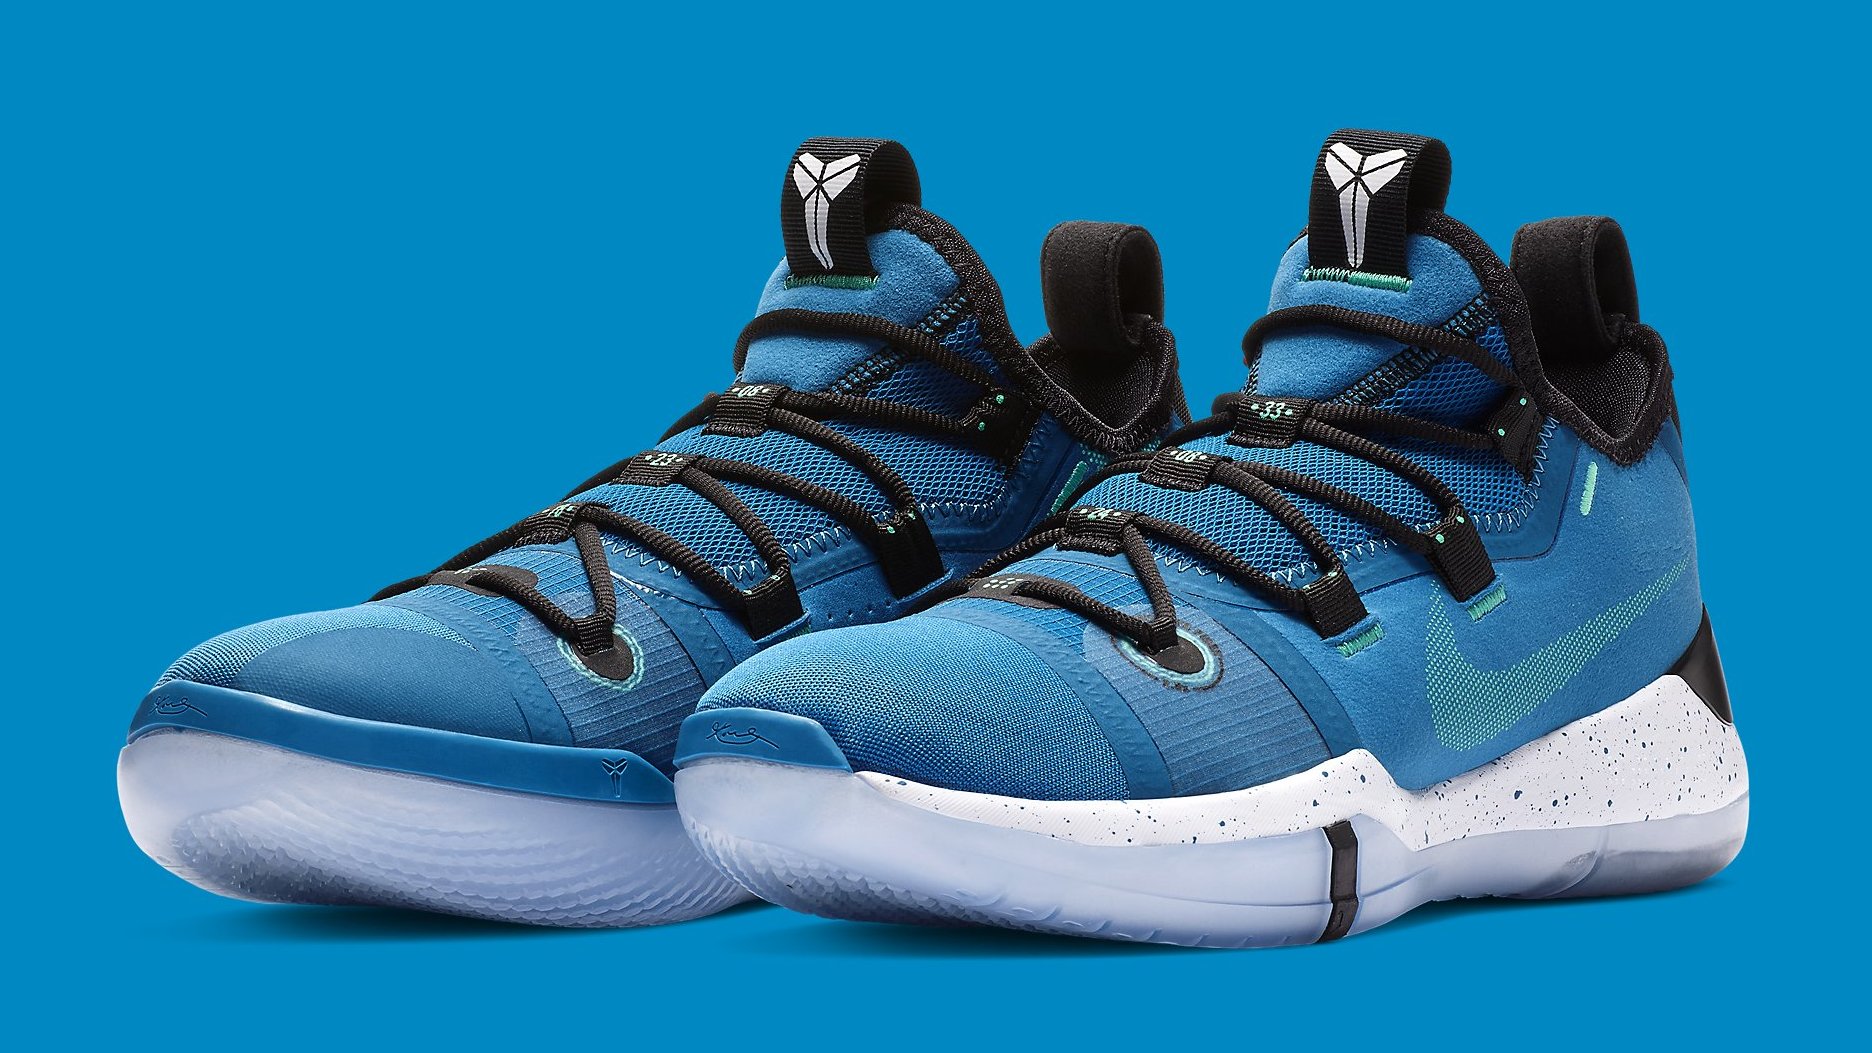 The Next Nike Kobe A.D. Looks Sharp in 'Military Blue